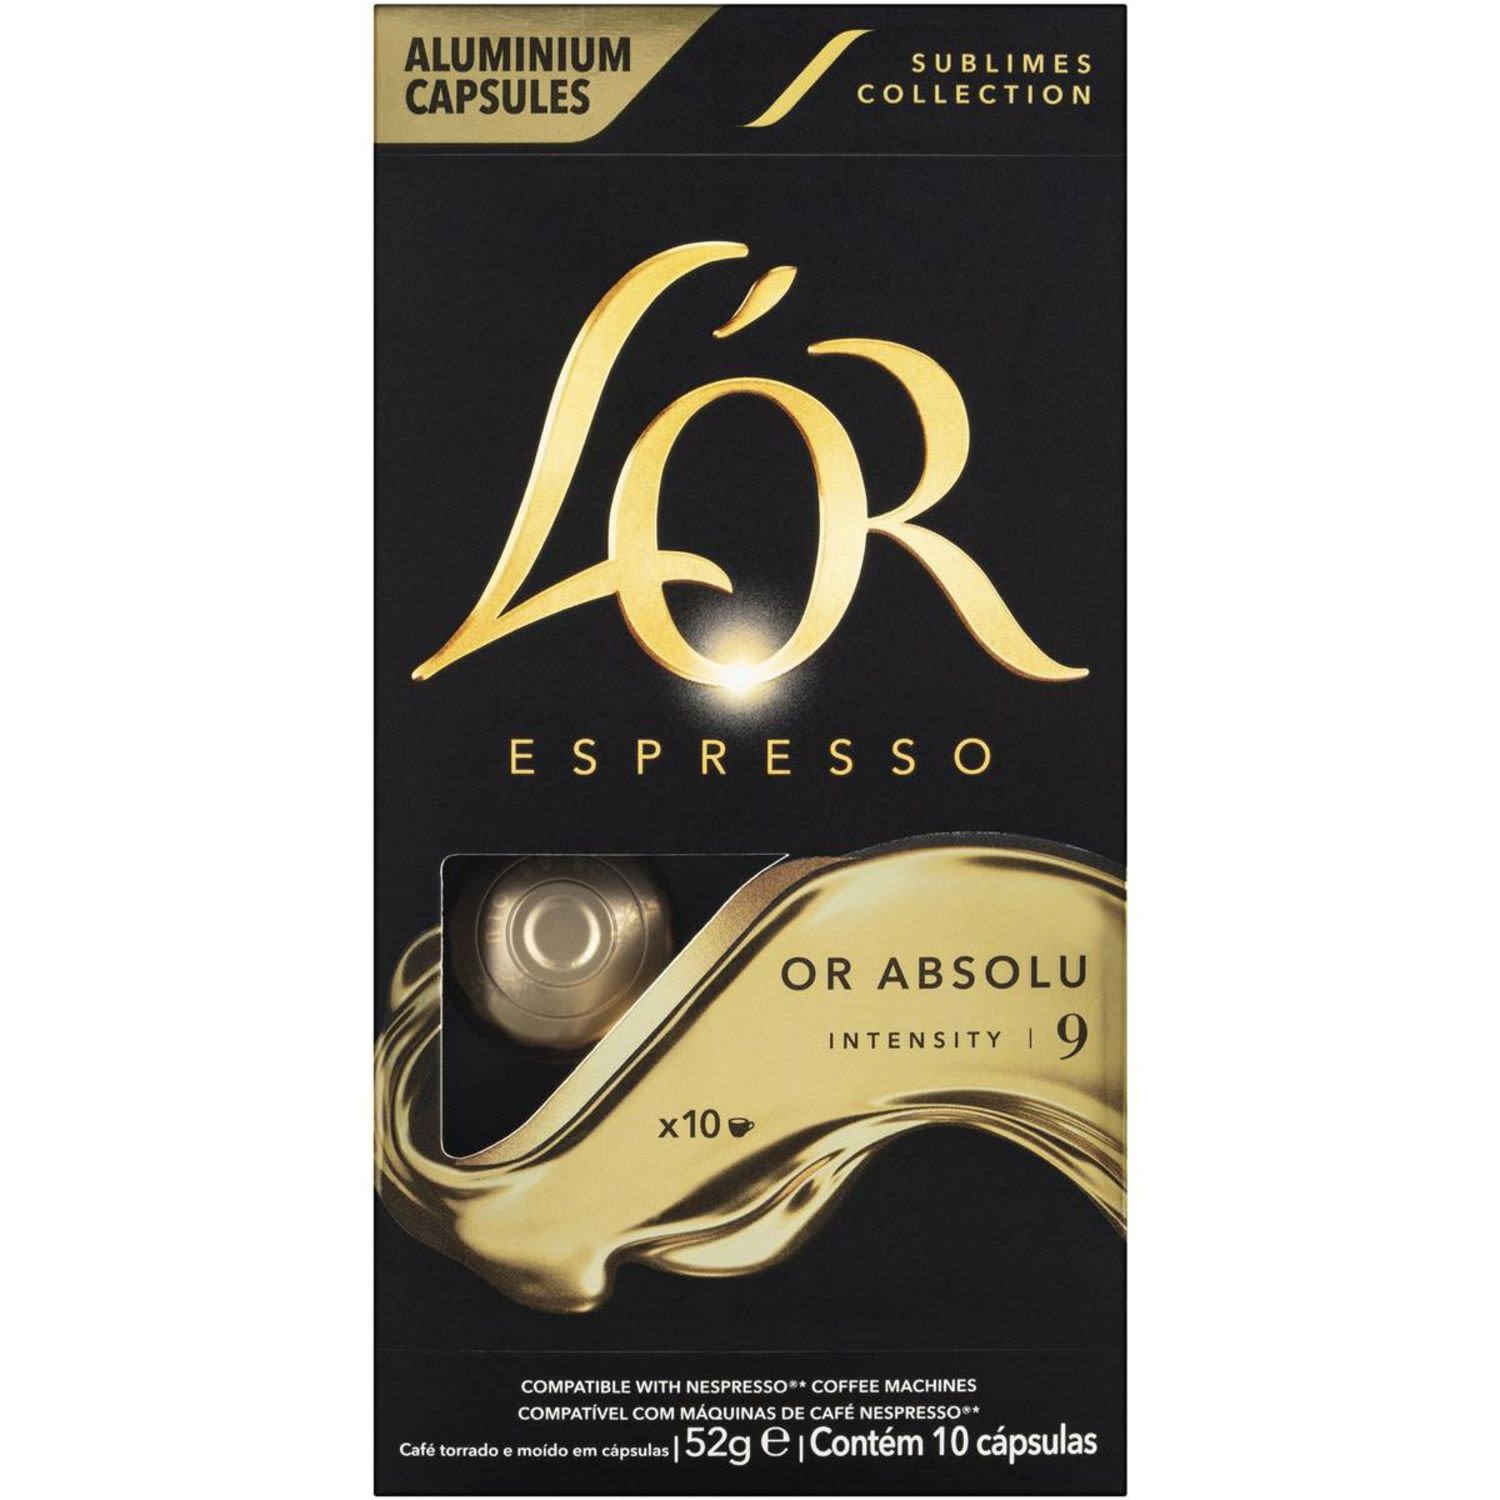 L'OR Espresso Or Absolu Coffee Capsules, 10 Each